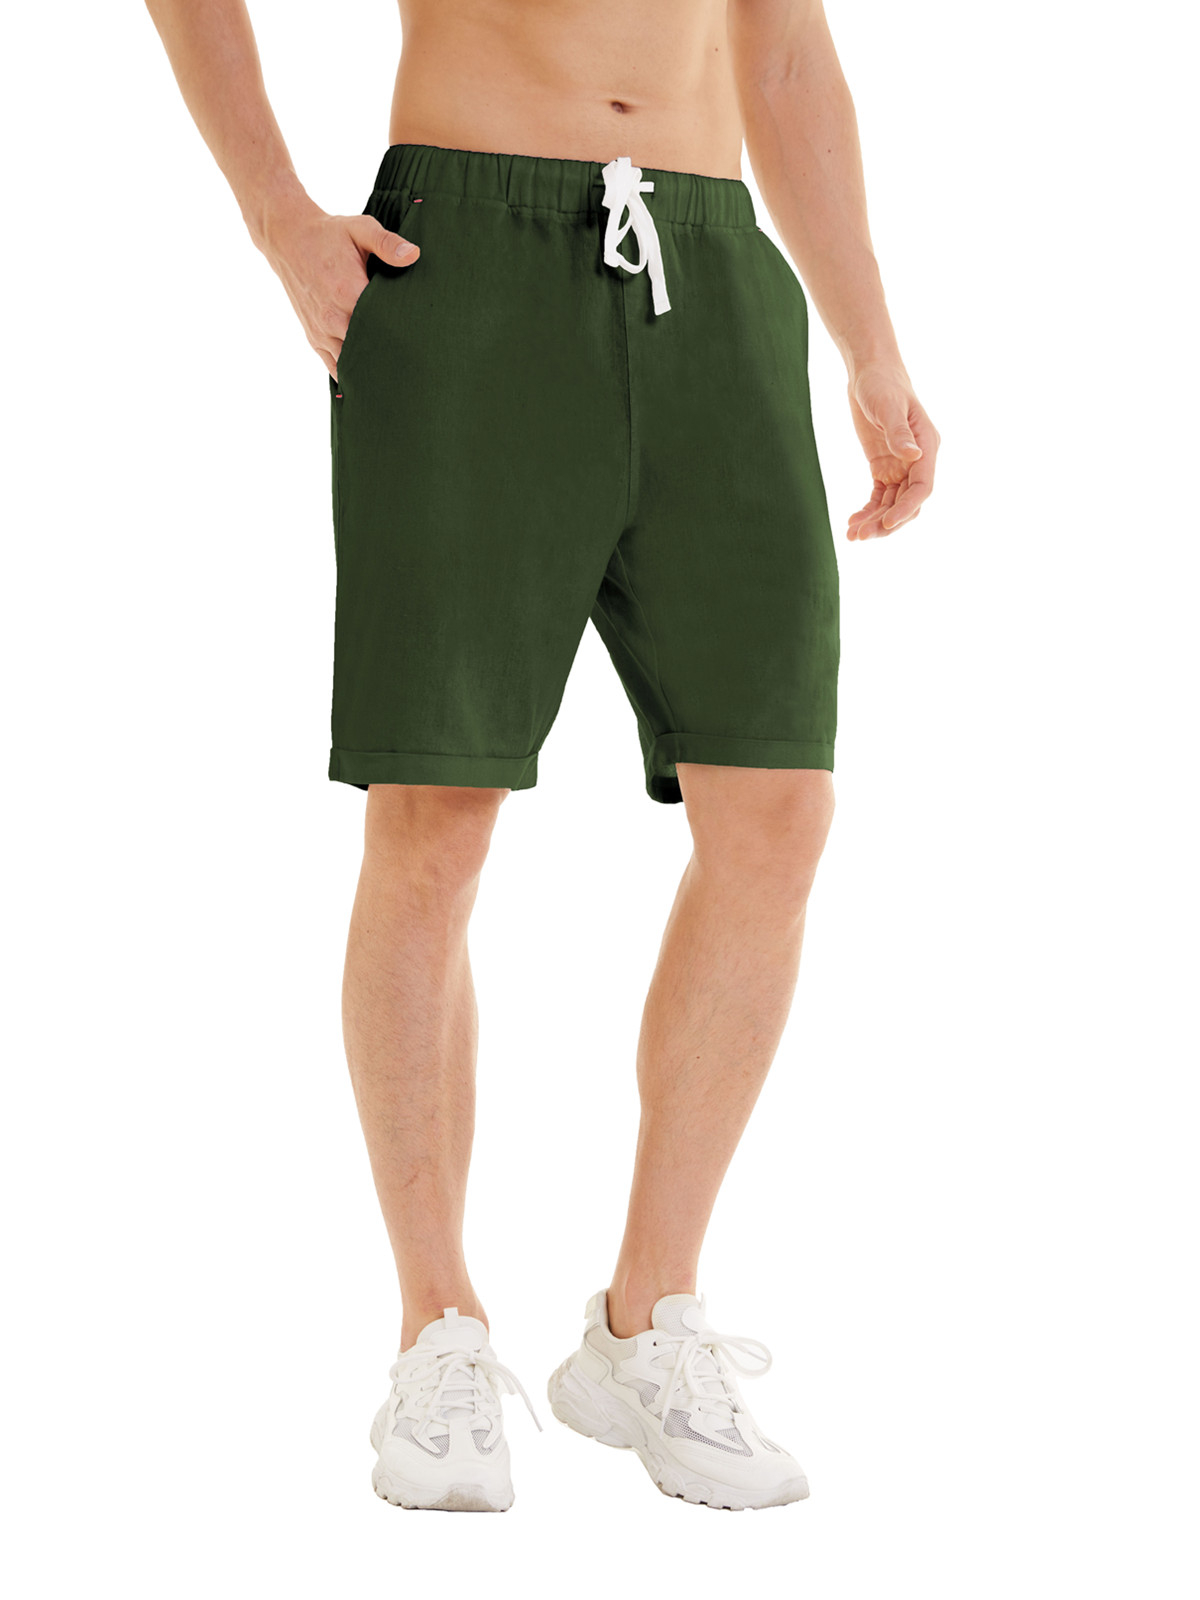 QPNGRP Men's Linen Cotton Casual Classic Fit Shorts Flat Front Drawstring Summer Beach Shorts with Pockets sarmygreen L